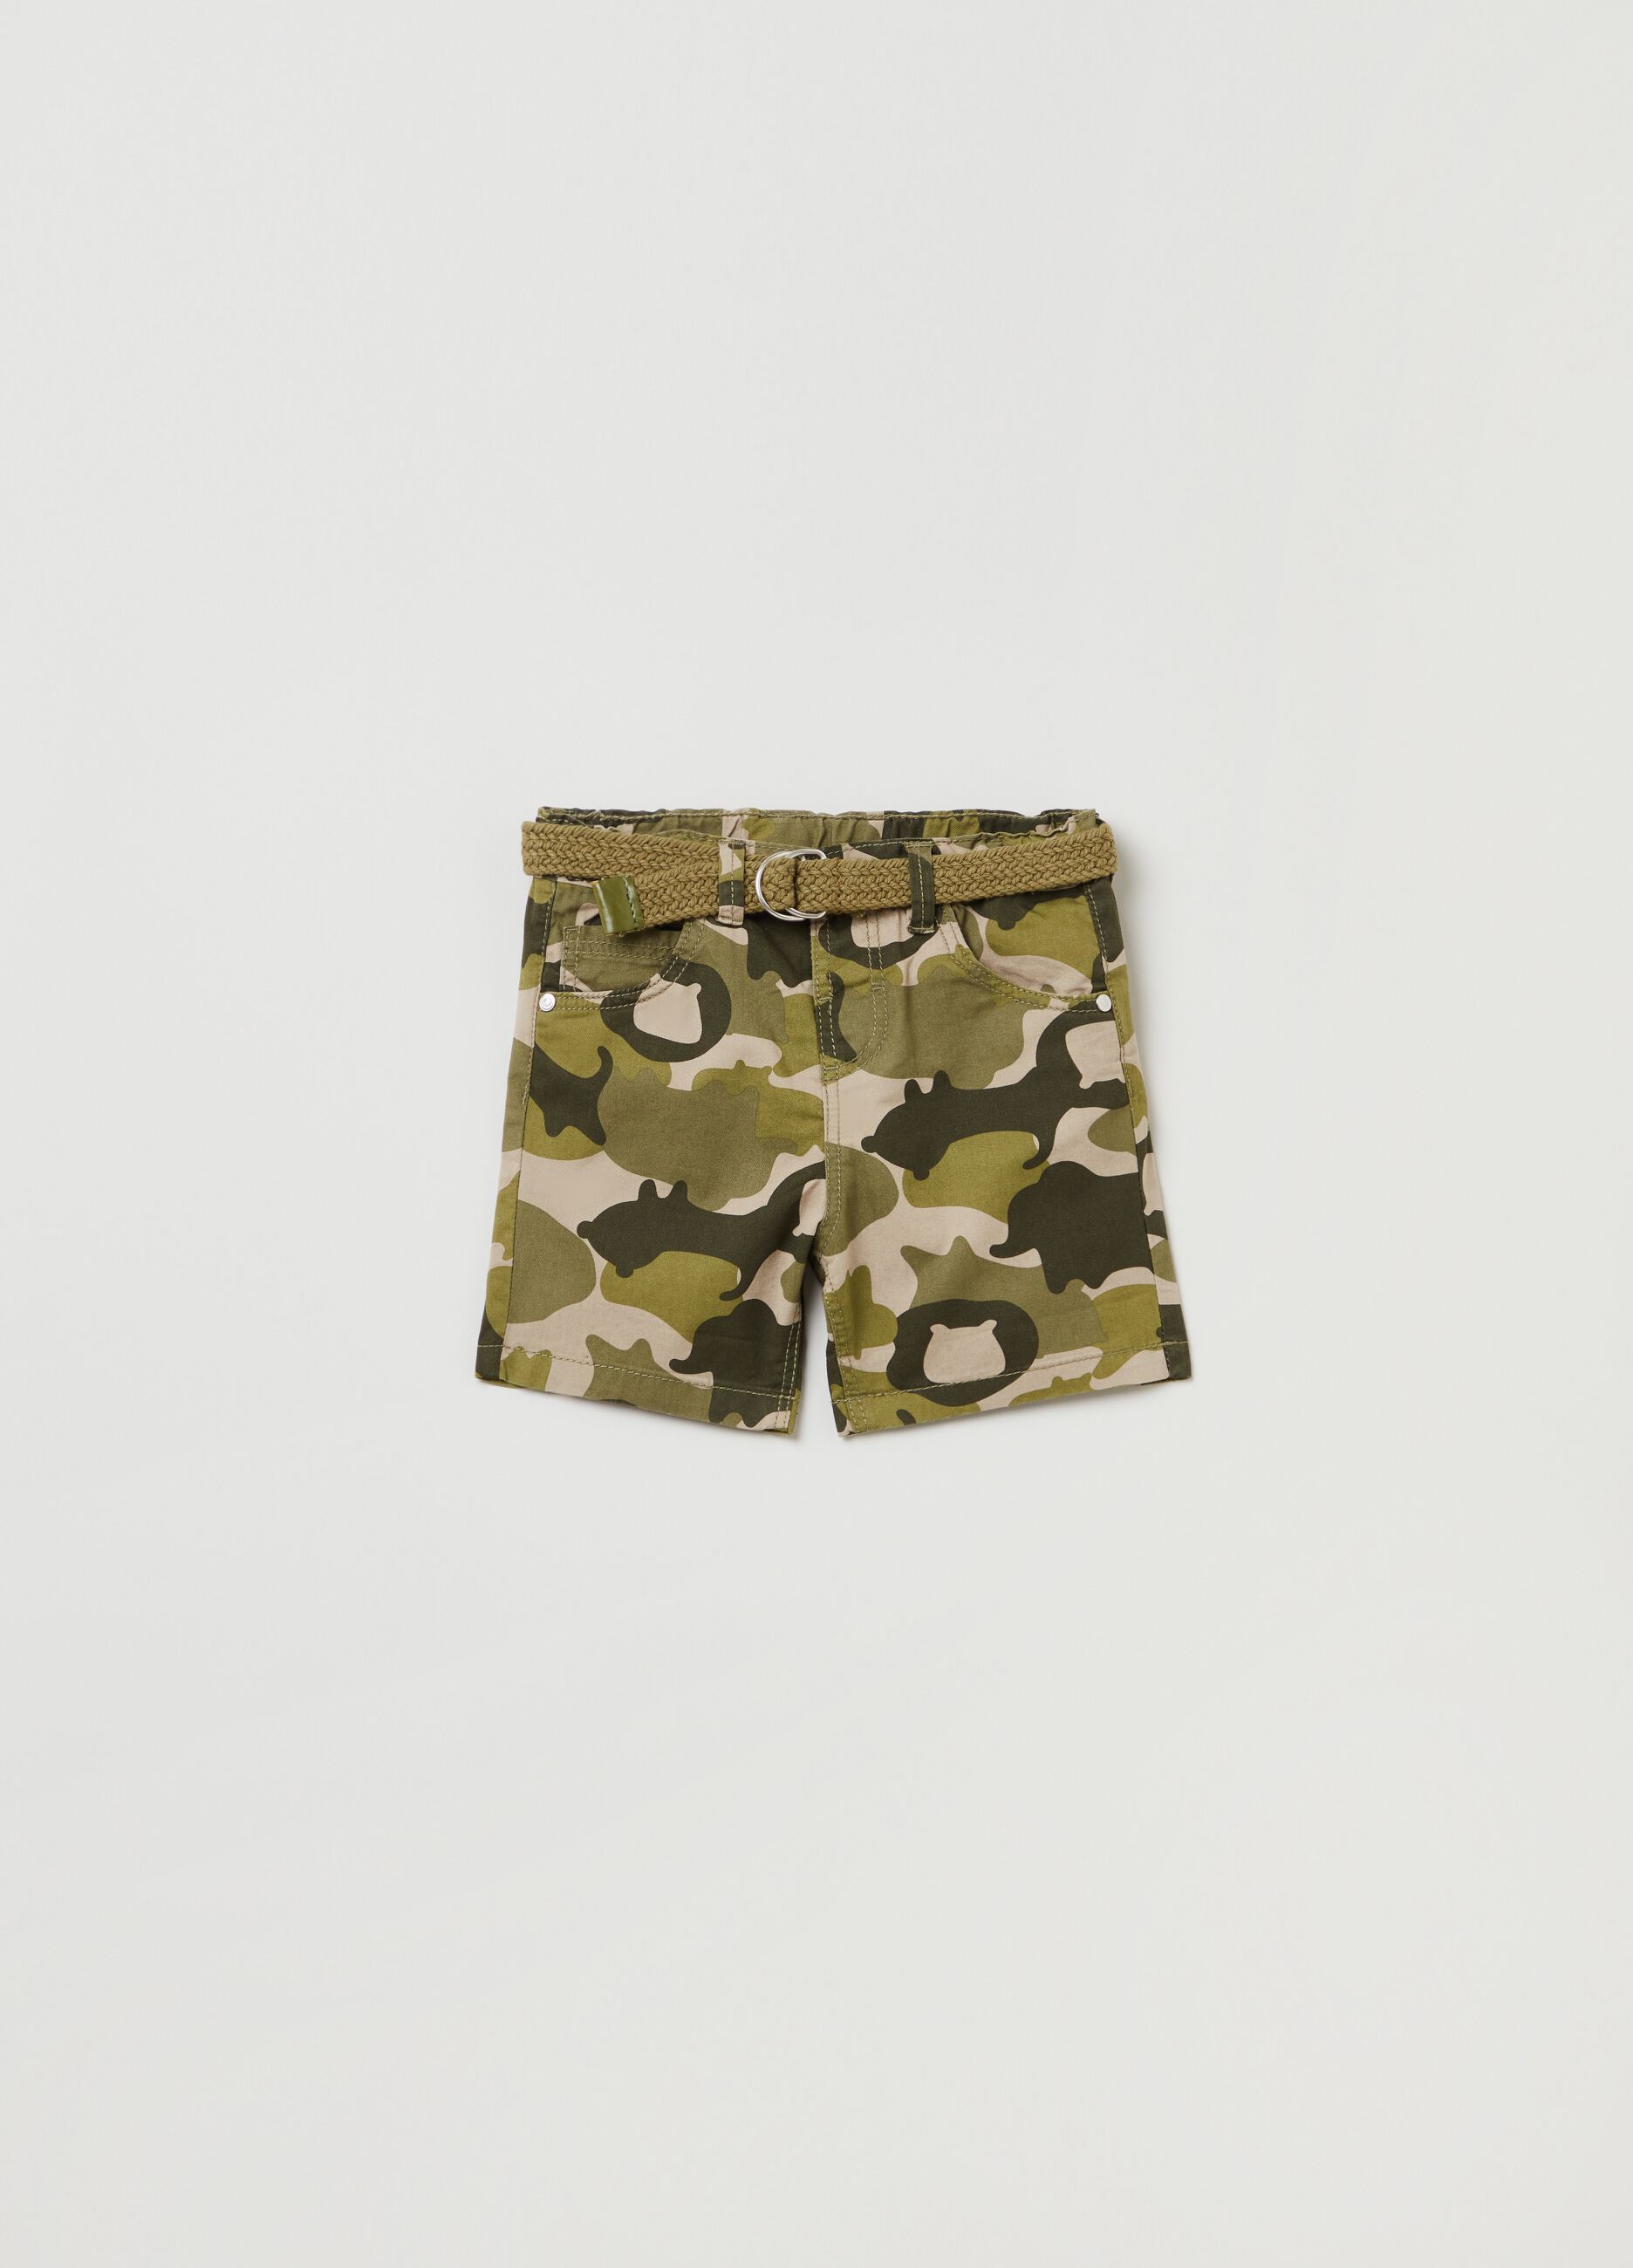 Camouflage cotton Bermuda shorts with belt